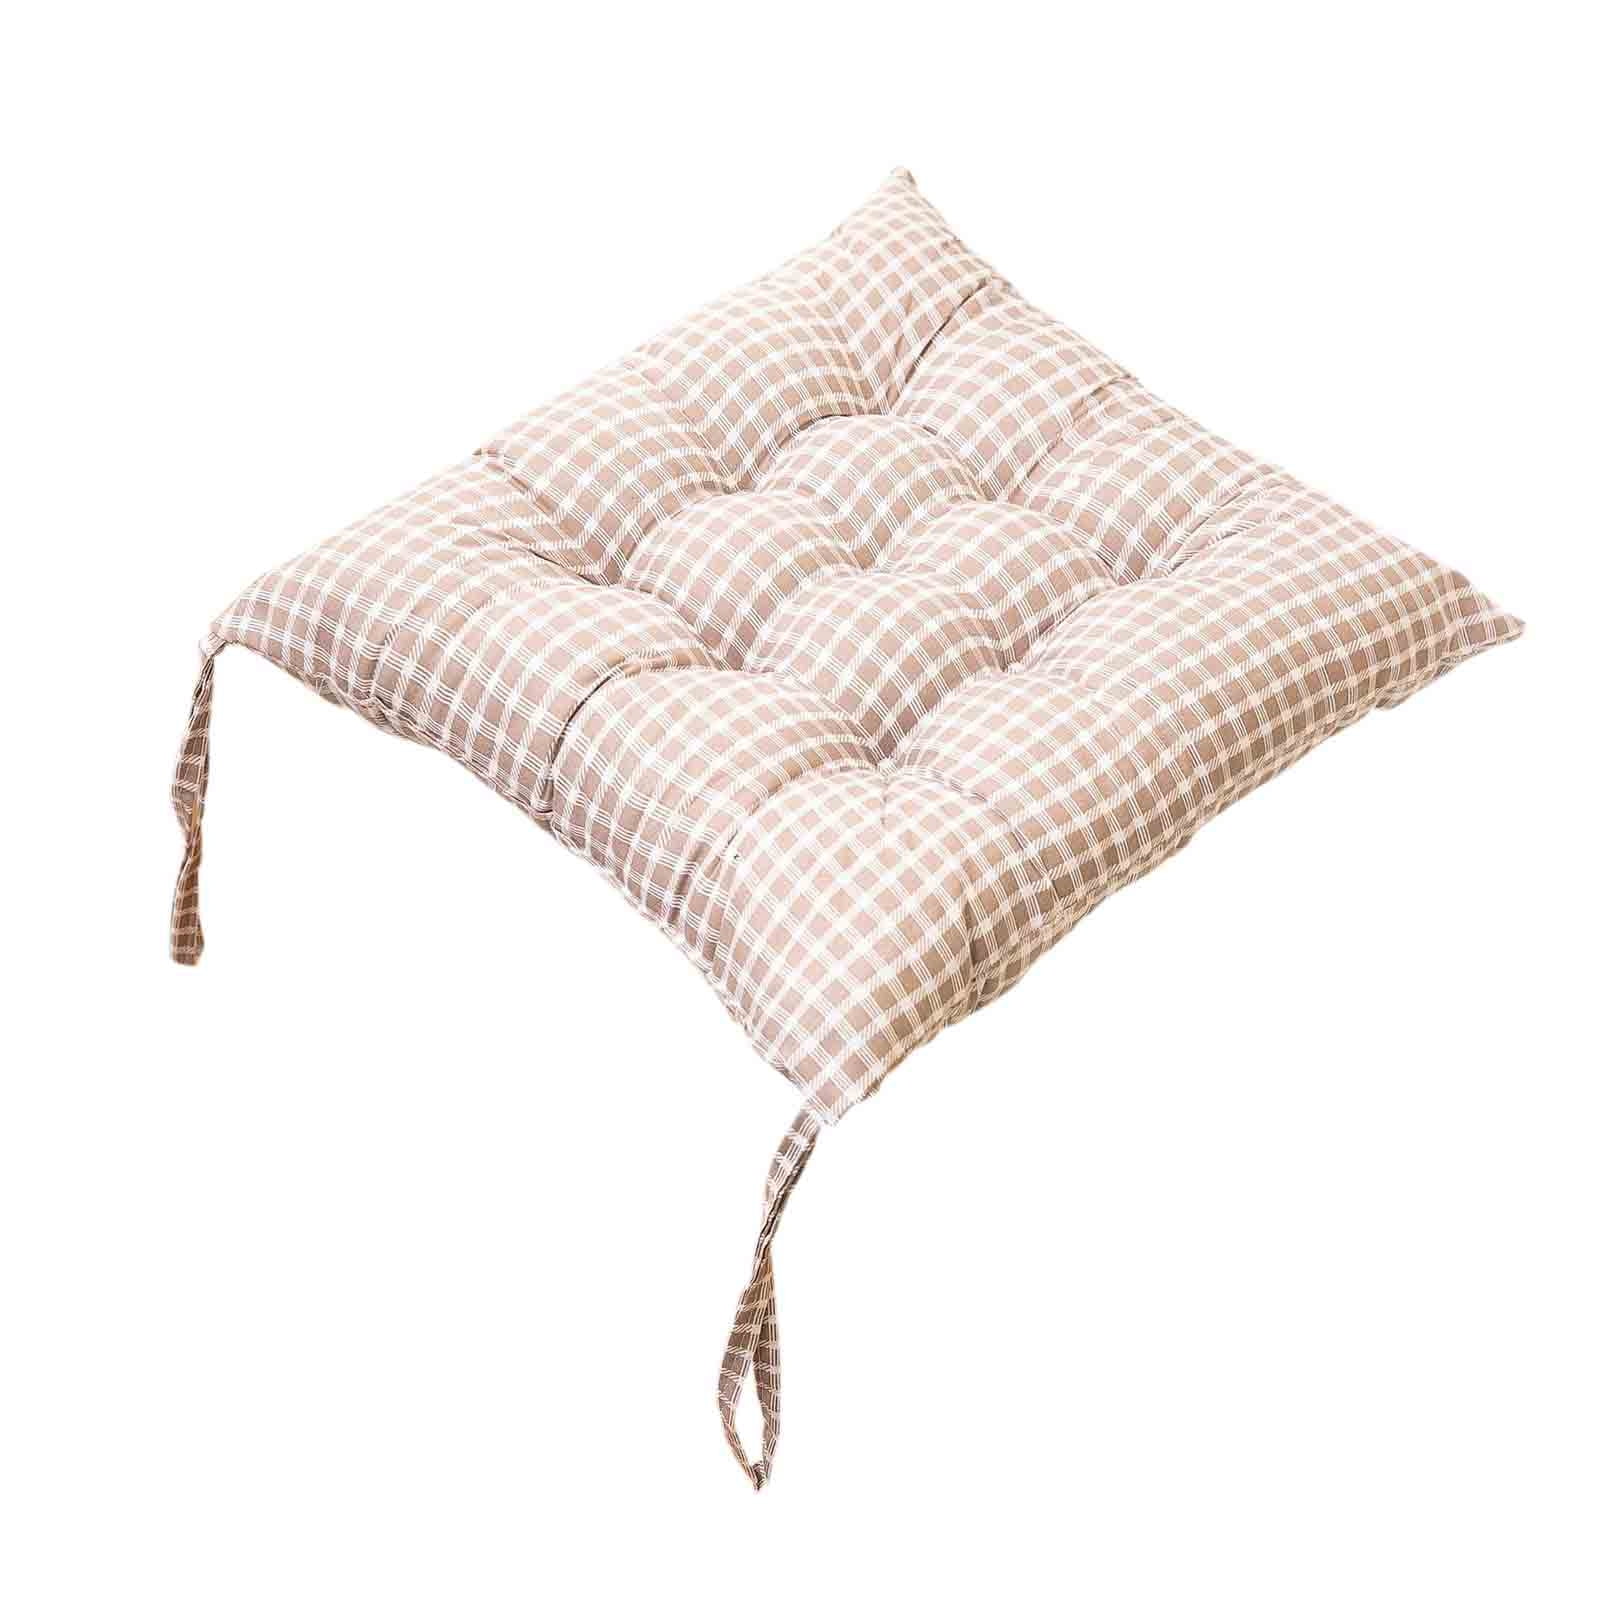 hoksml Christmas Clearance Deals Home Supplies Outdoor Garden Patio Home  Kitchen Office Sofa Chair Seat Soft Cushion Pad Bedding